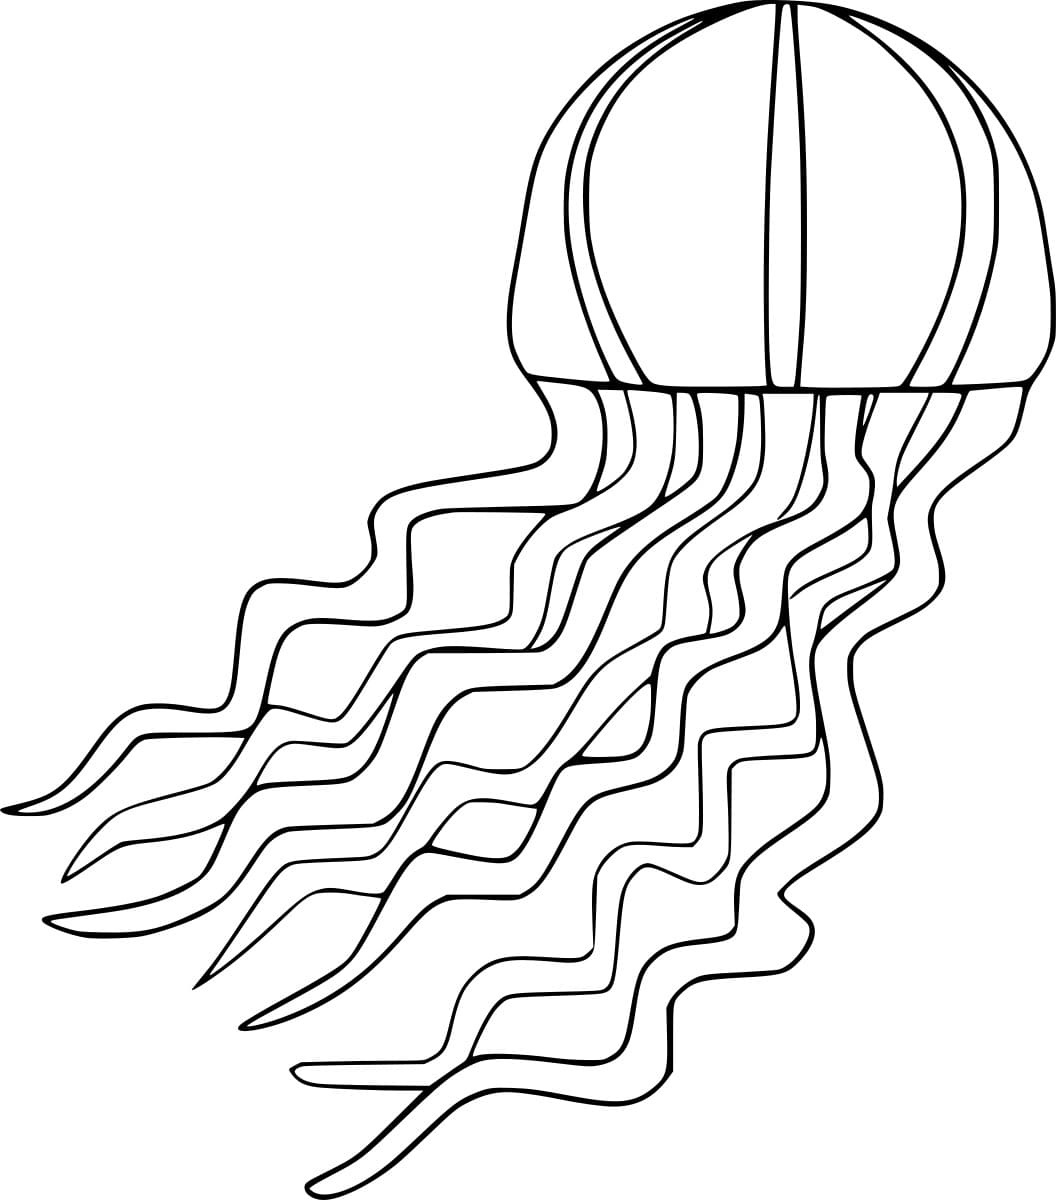 Big Jellyfish Image Coloring Page